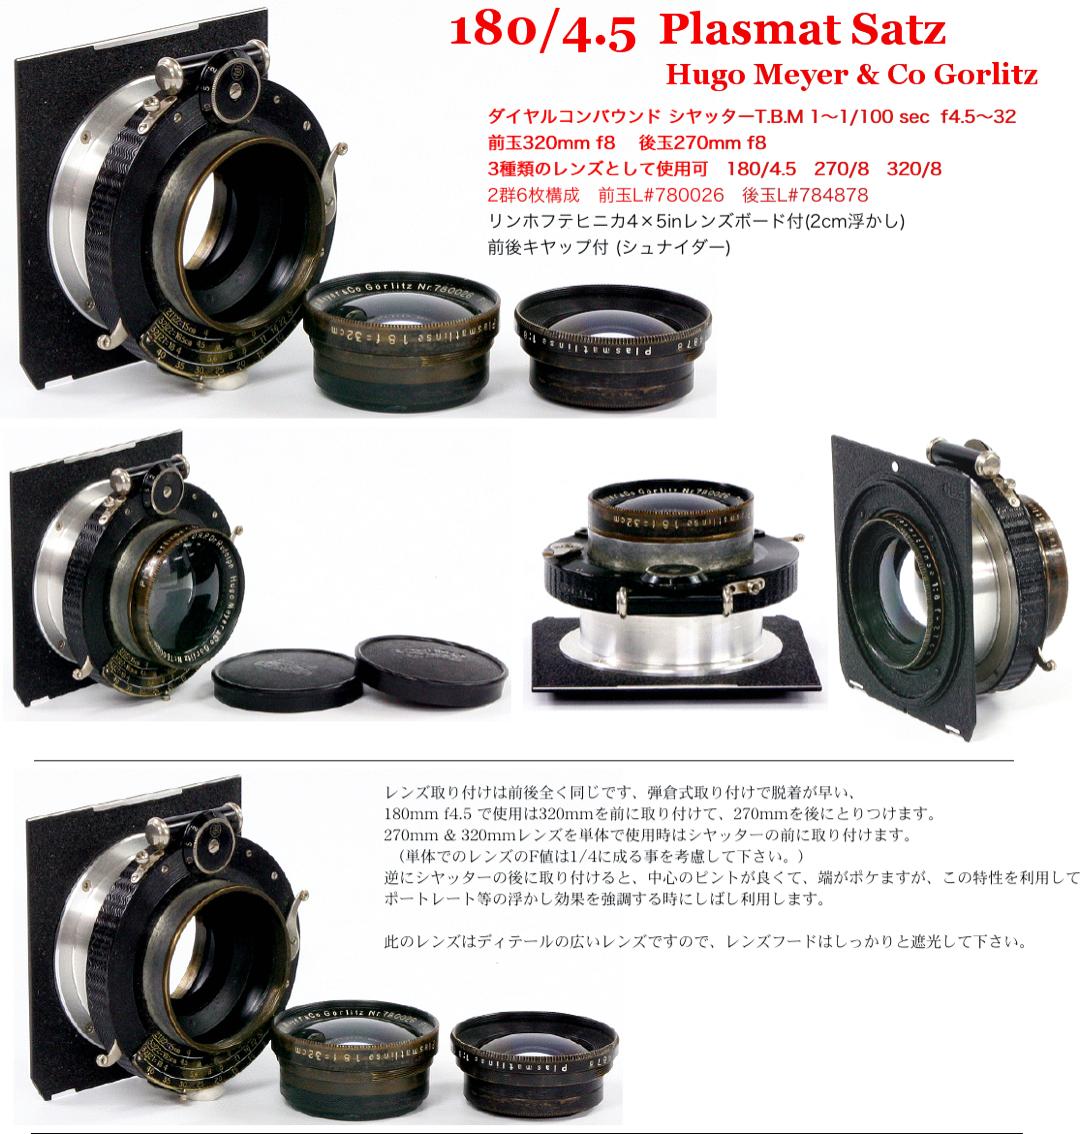 180/4.5 Plasmat Satz Ser.4 (Hugo Meyer) トリプルレンズ 270mm +320mmu003d180mm  F4.5に成ります レンズ玉2ヶで3つの焦点距離が可能｜カメラのマツバラ光機